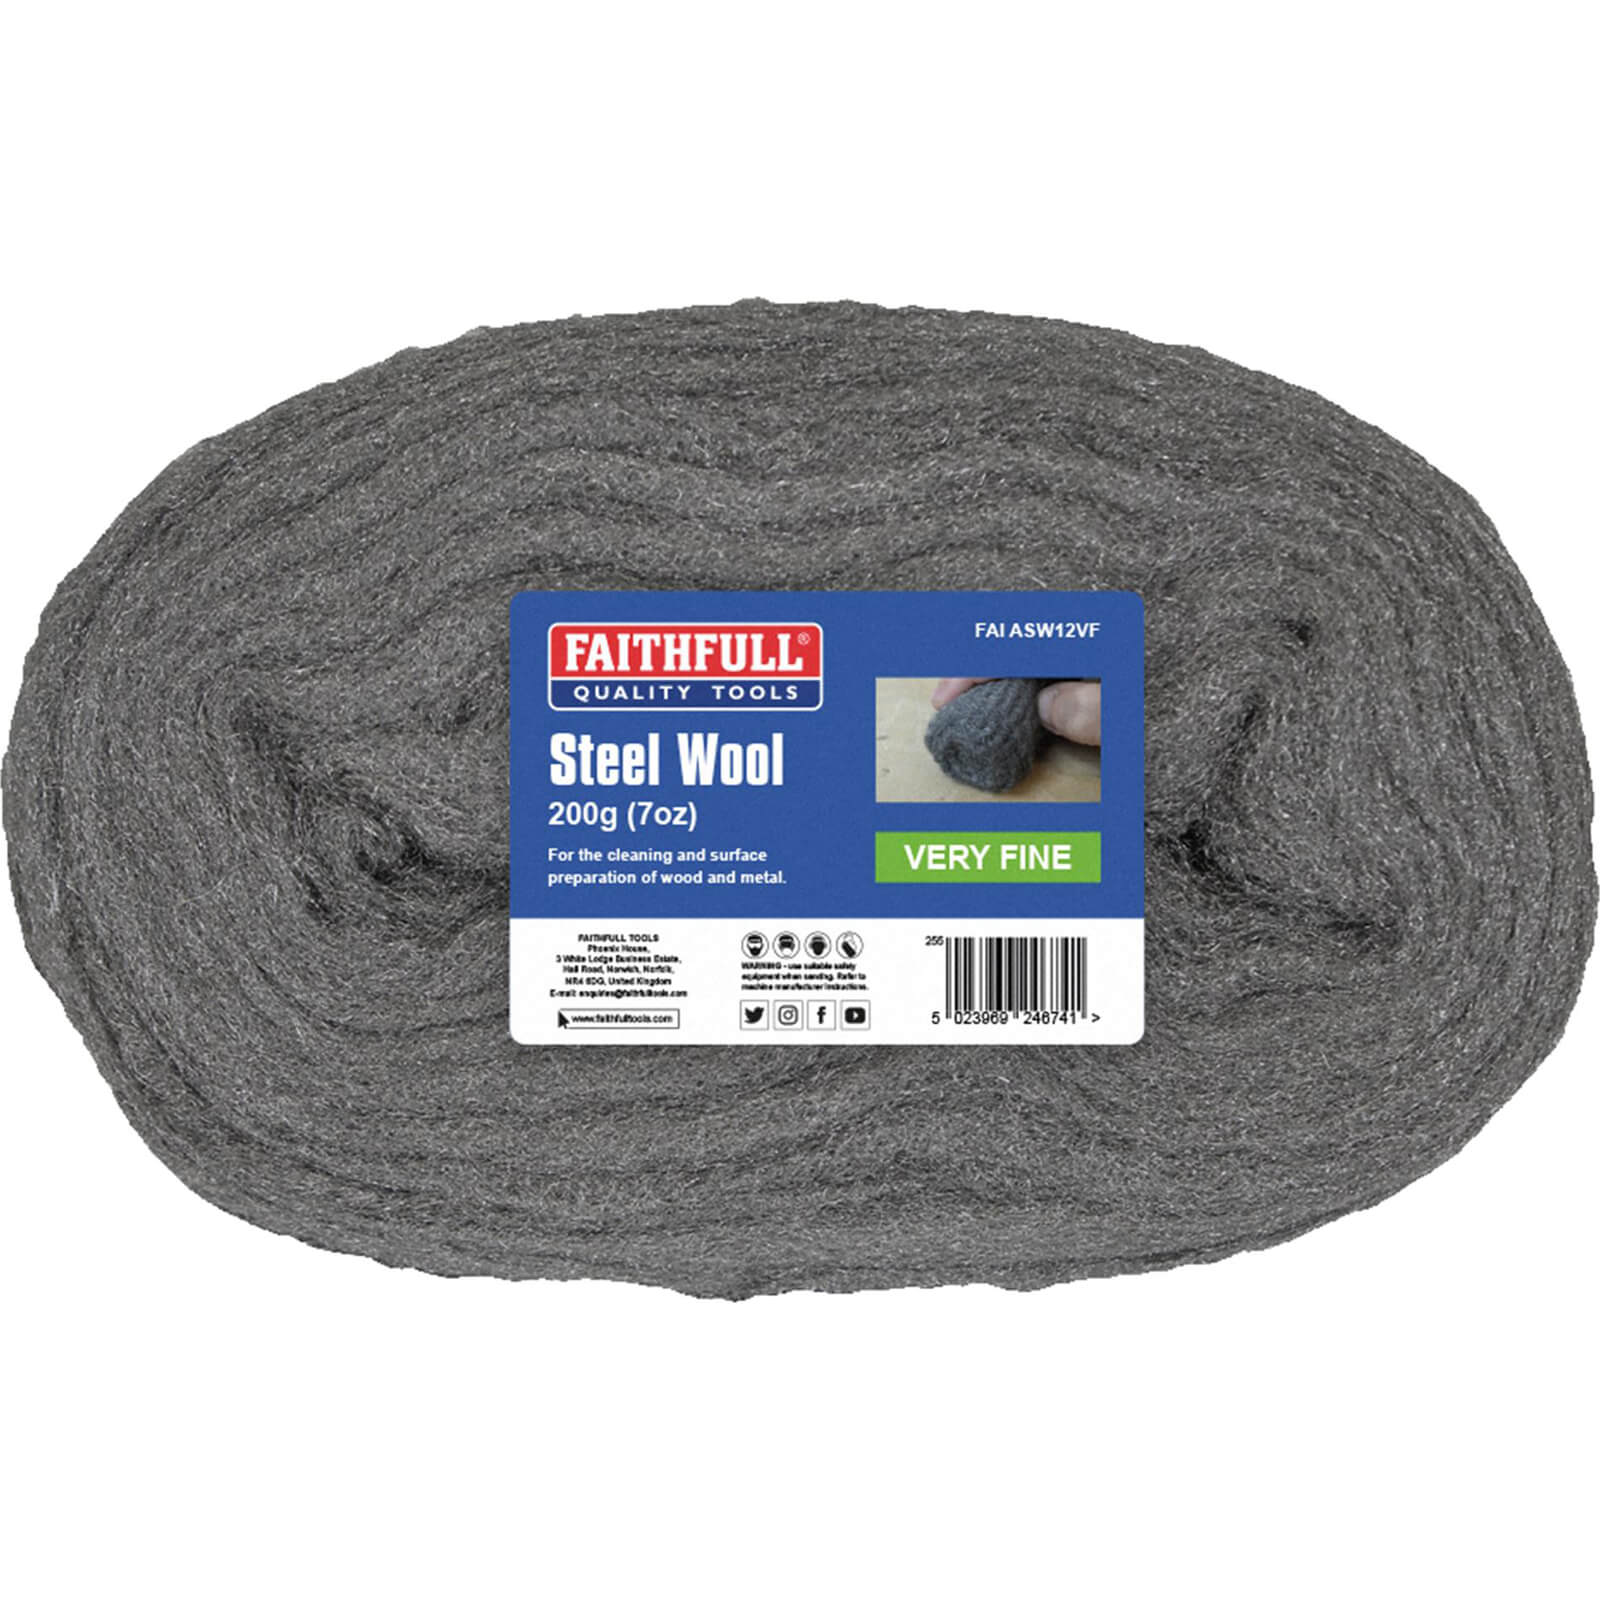 Image of Faithfull Steel Wire Wool Very Fine 200g